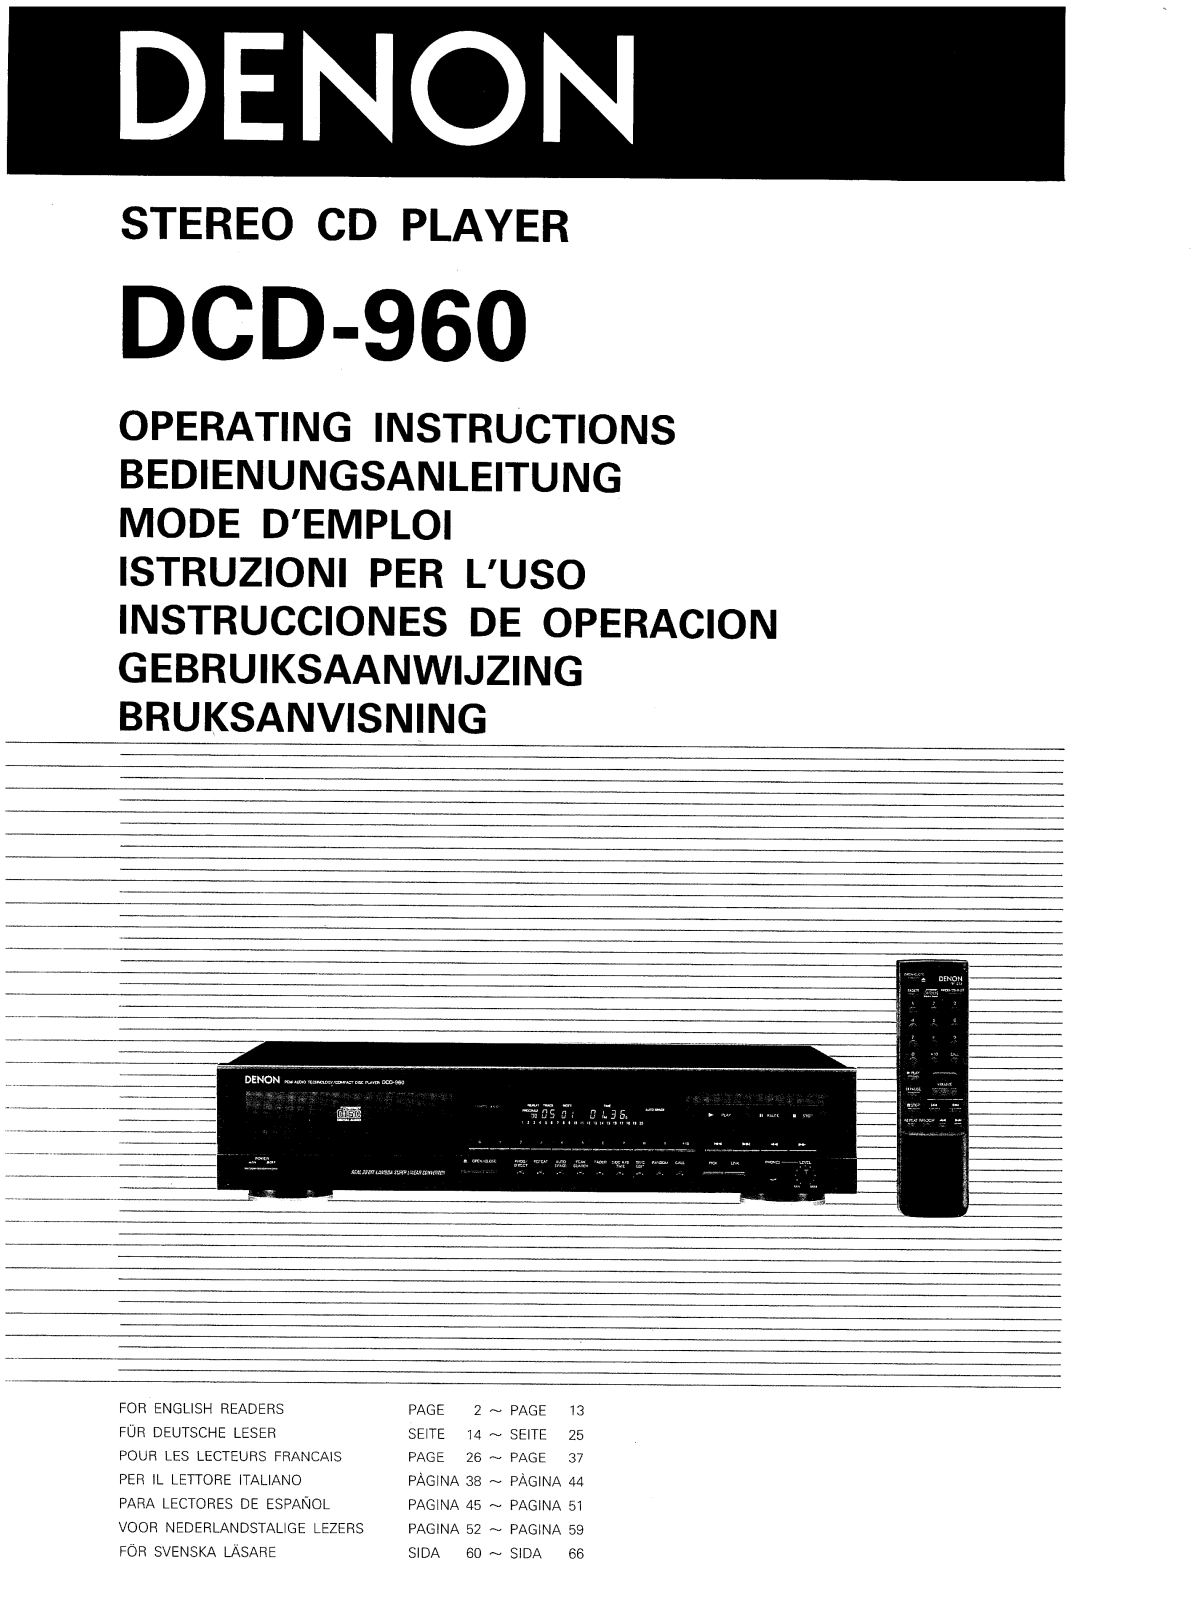 Denon DCD-960 Manual